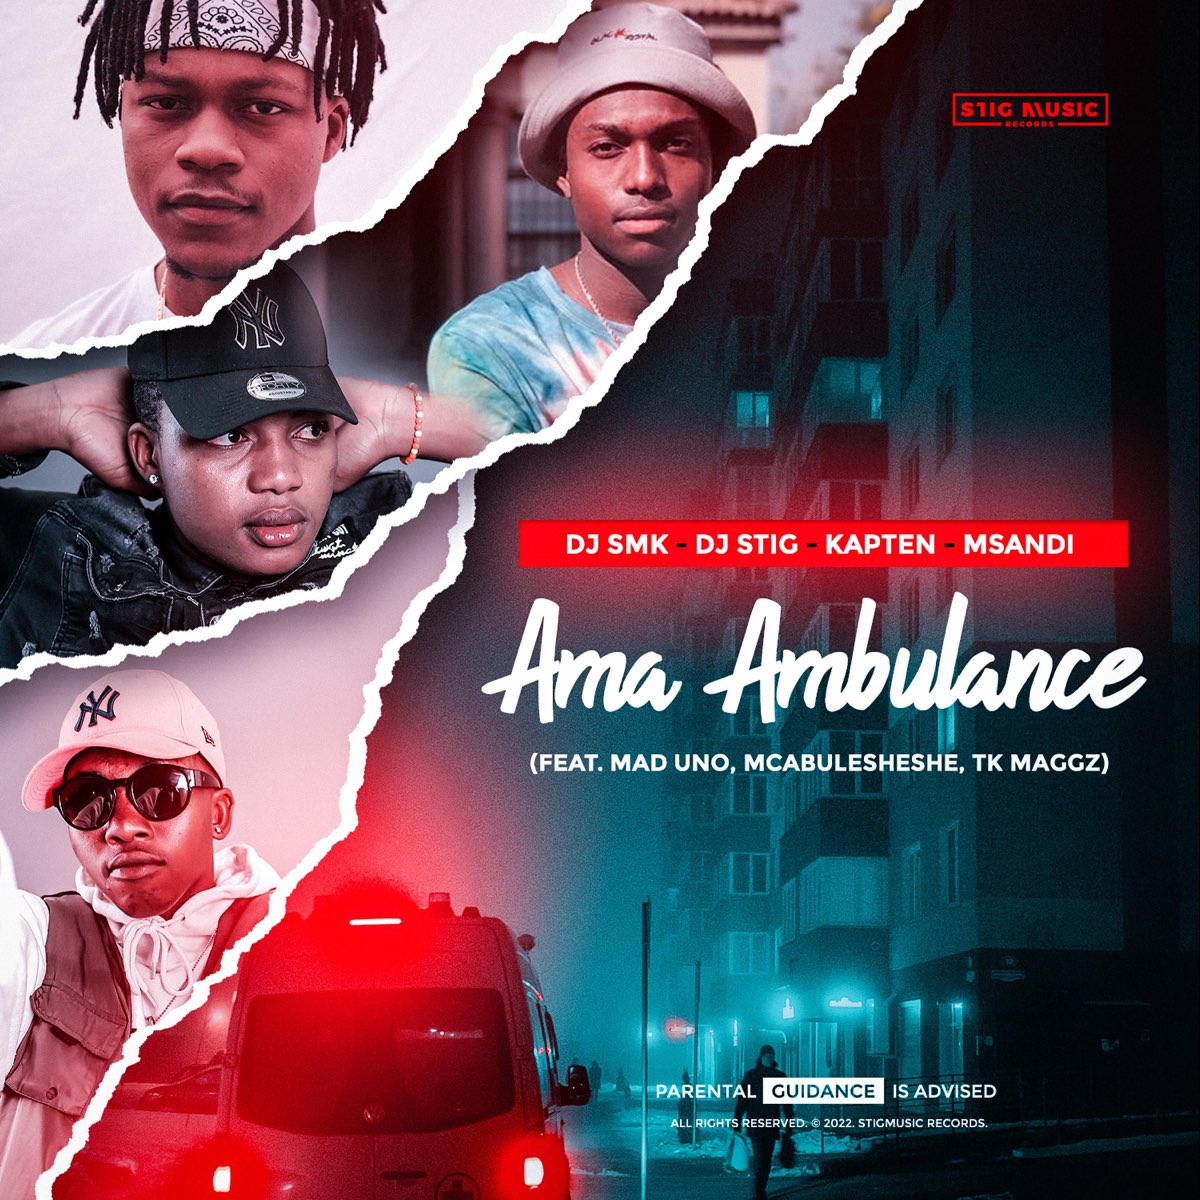 Ama Ambulance (feat. Msandi, Kapten, Mad Uno, Mcabulesheshe & TK Maggz) -  Single by Dj Stig & Dj SMK on Apple Music